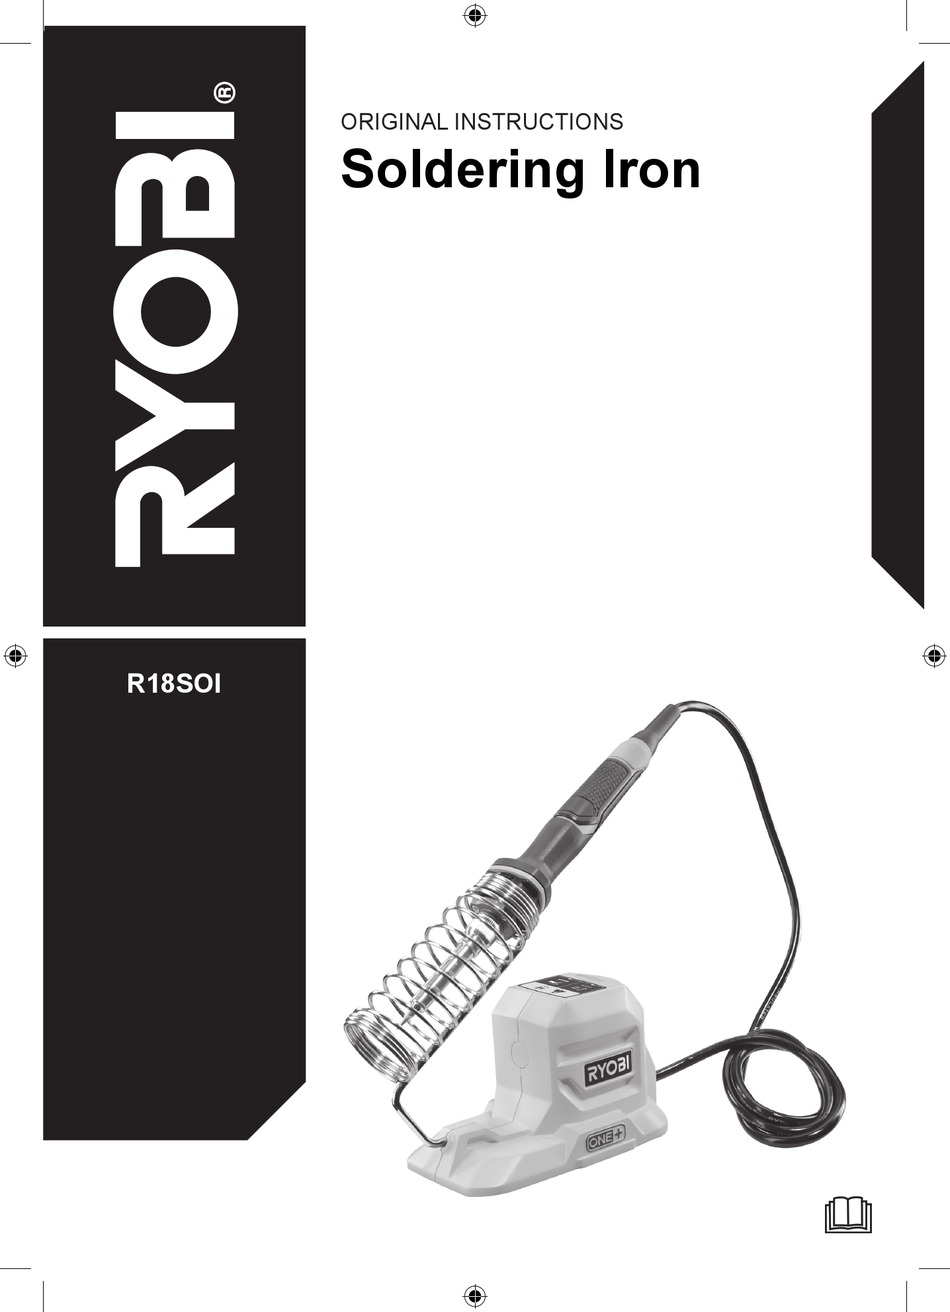 RYOBI R18SOI ORIGINAL INSTRUCTIONS MANUAL Pdf Download | ManualsLib